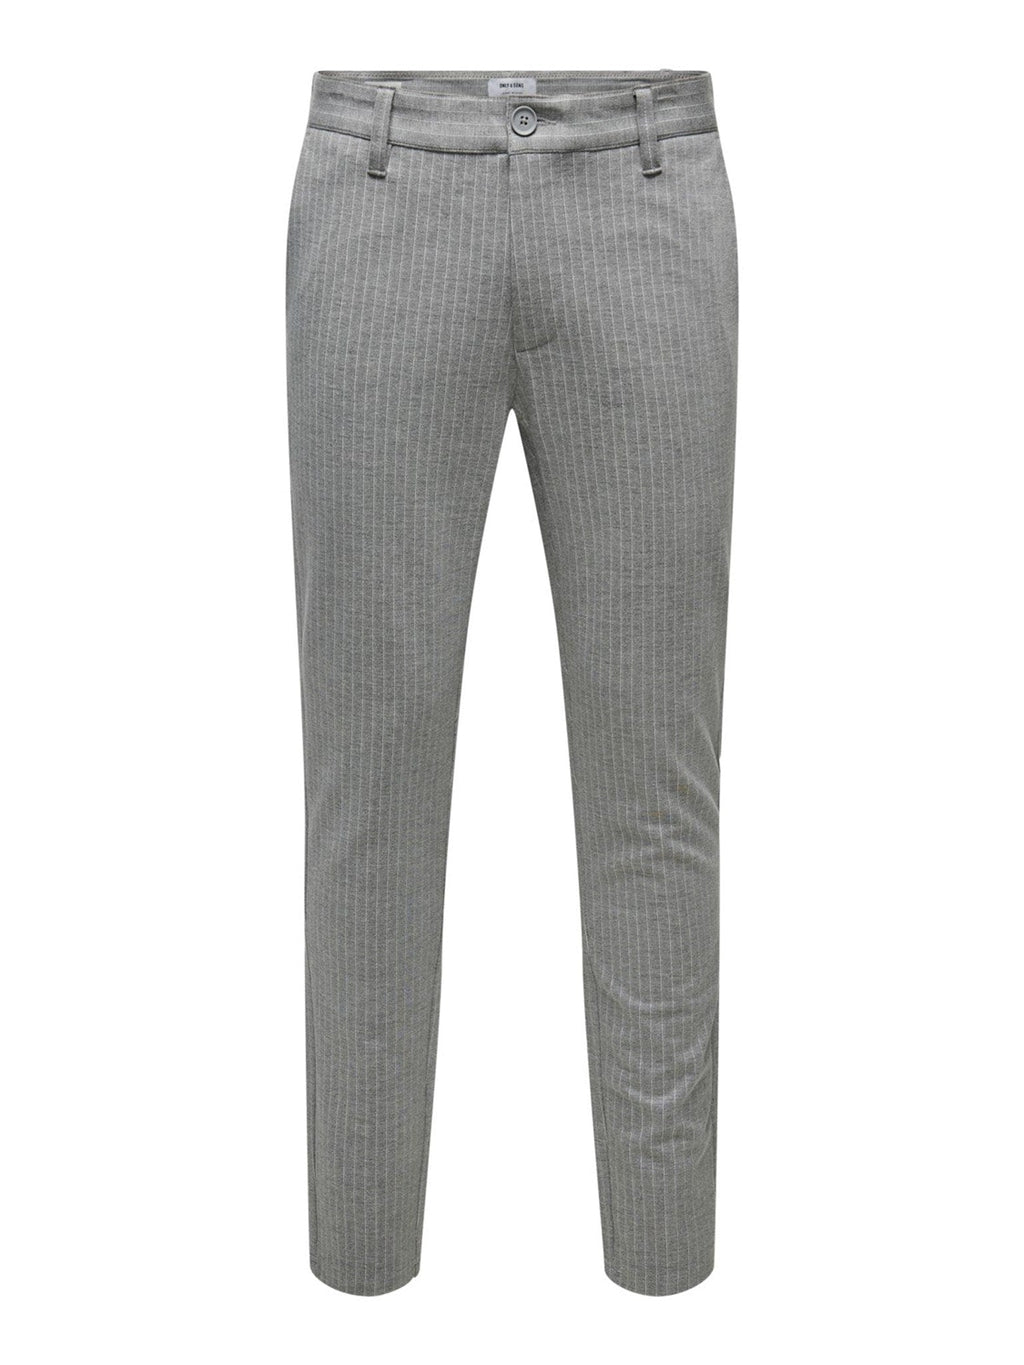 Marcos Pantalones - Rayas de gris claro